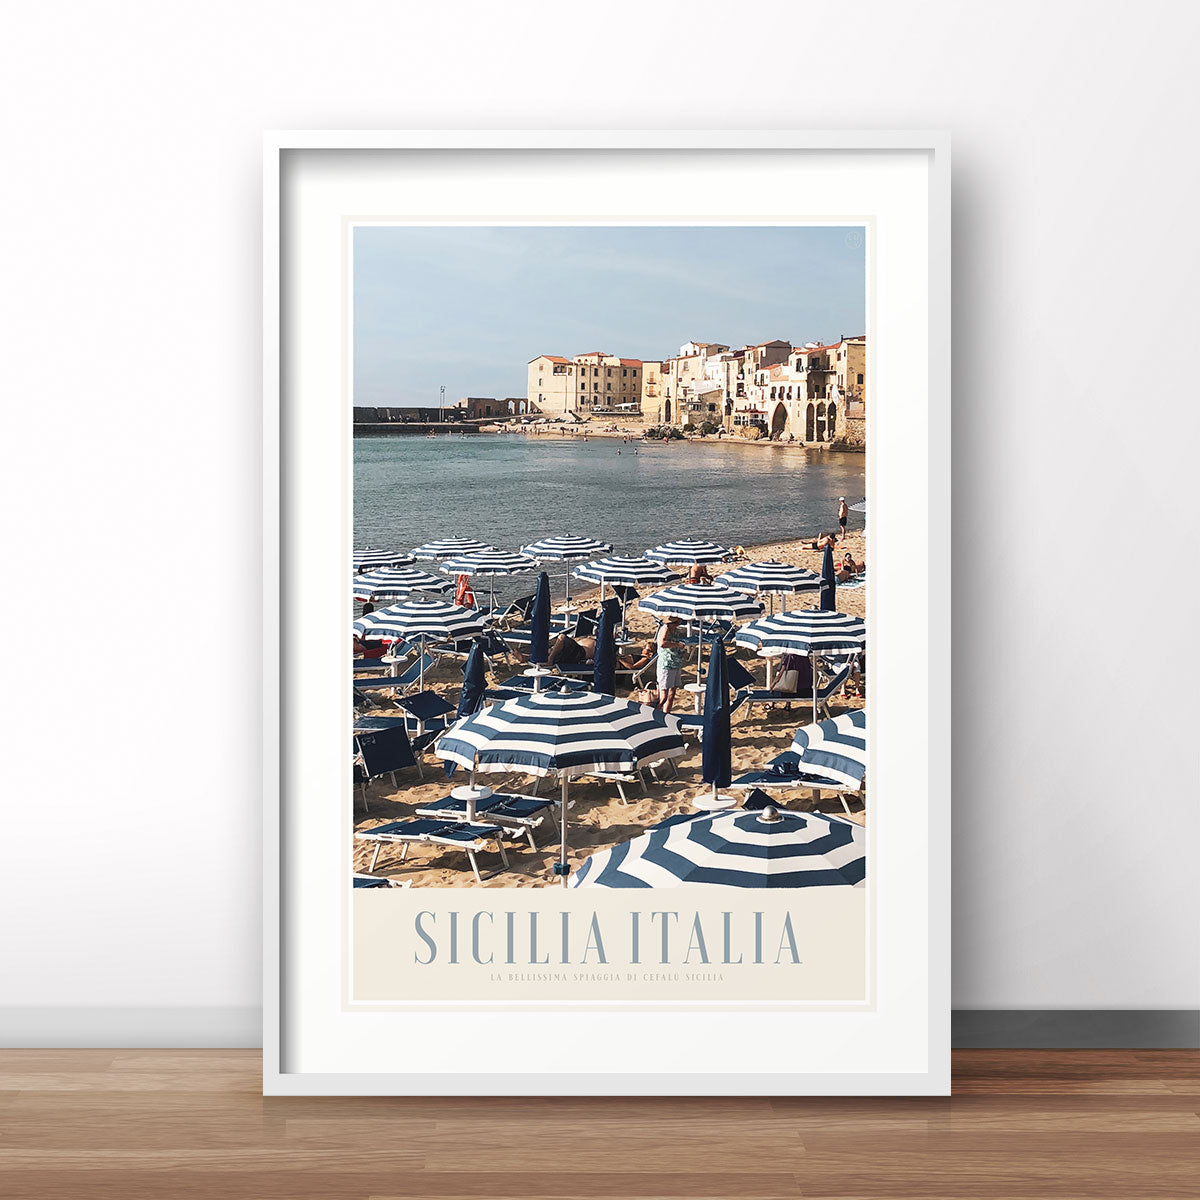 Sicilia Italia vintage retro poster print from Places We Luv